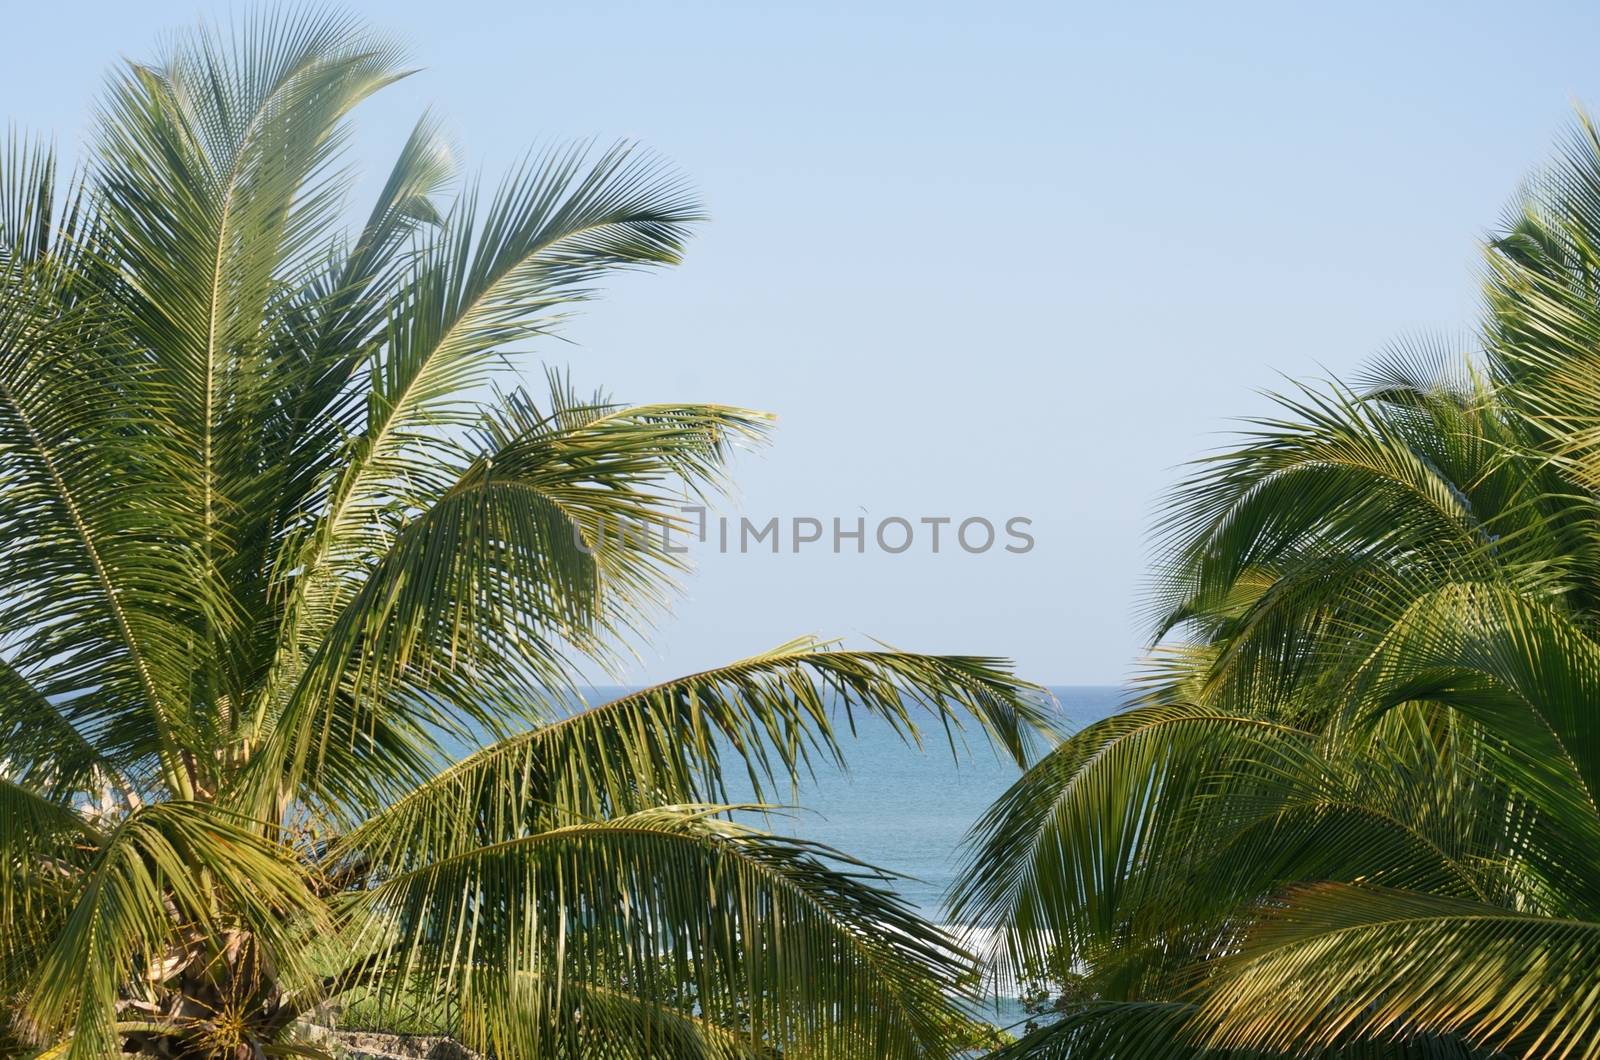 Sea through Palm trees by pauws99